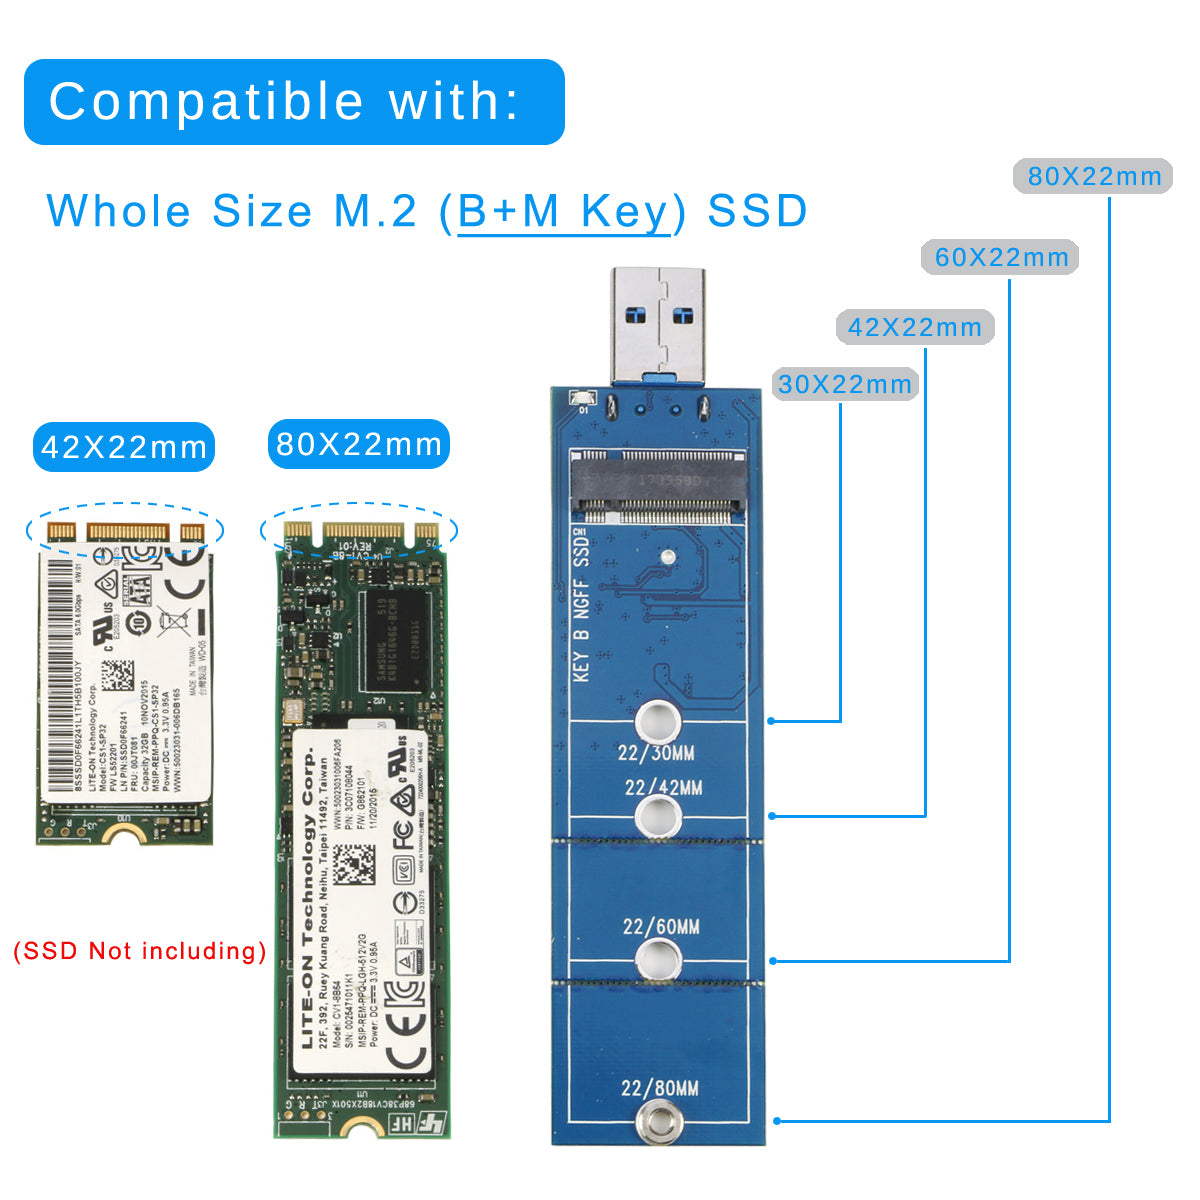 RIITOP M.2 Enclosure USB 3.0, External M.2 SSD (SATA